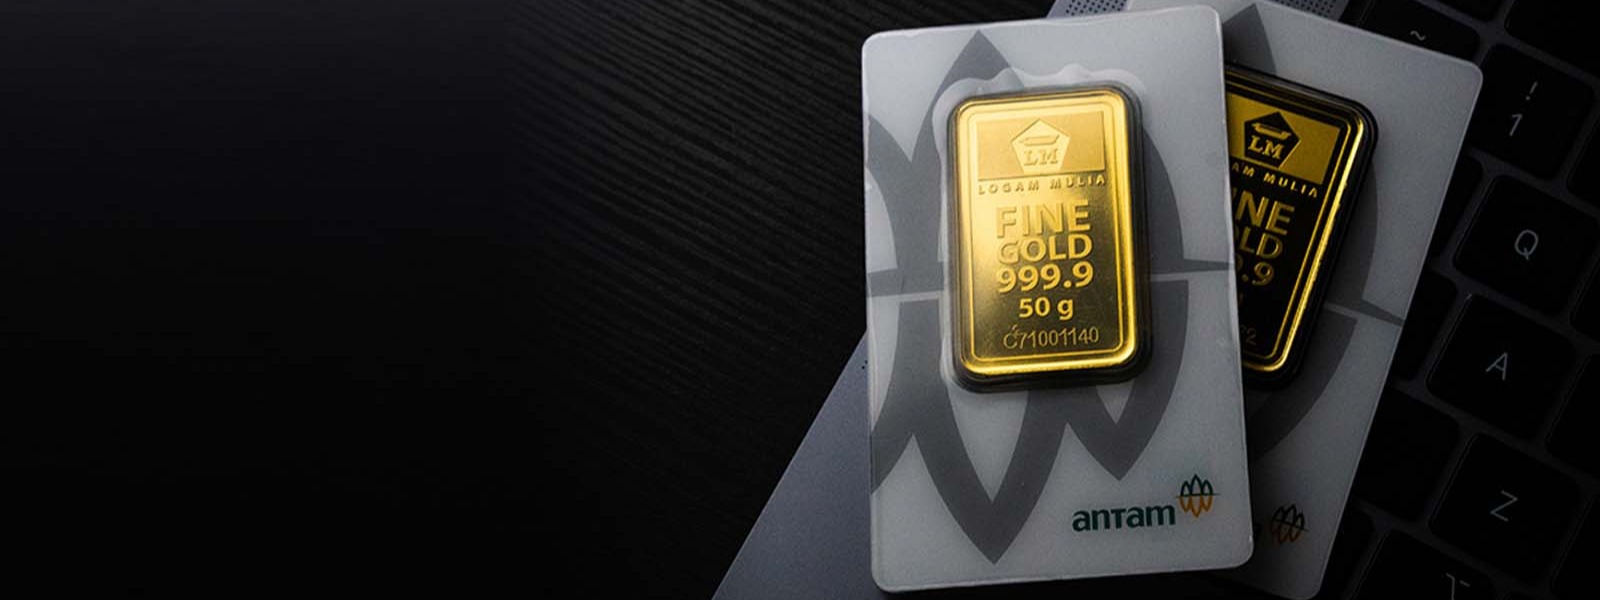 Kini Anda Dapat Membeli Emas Secara Online!